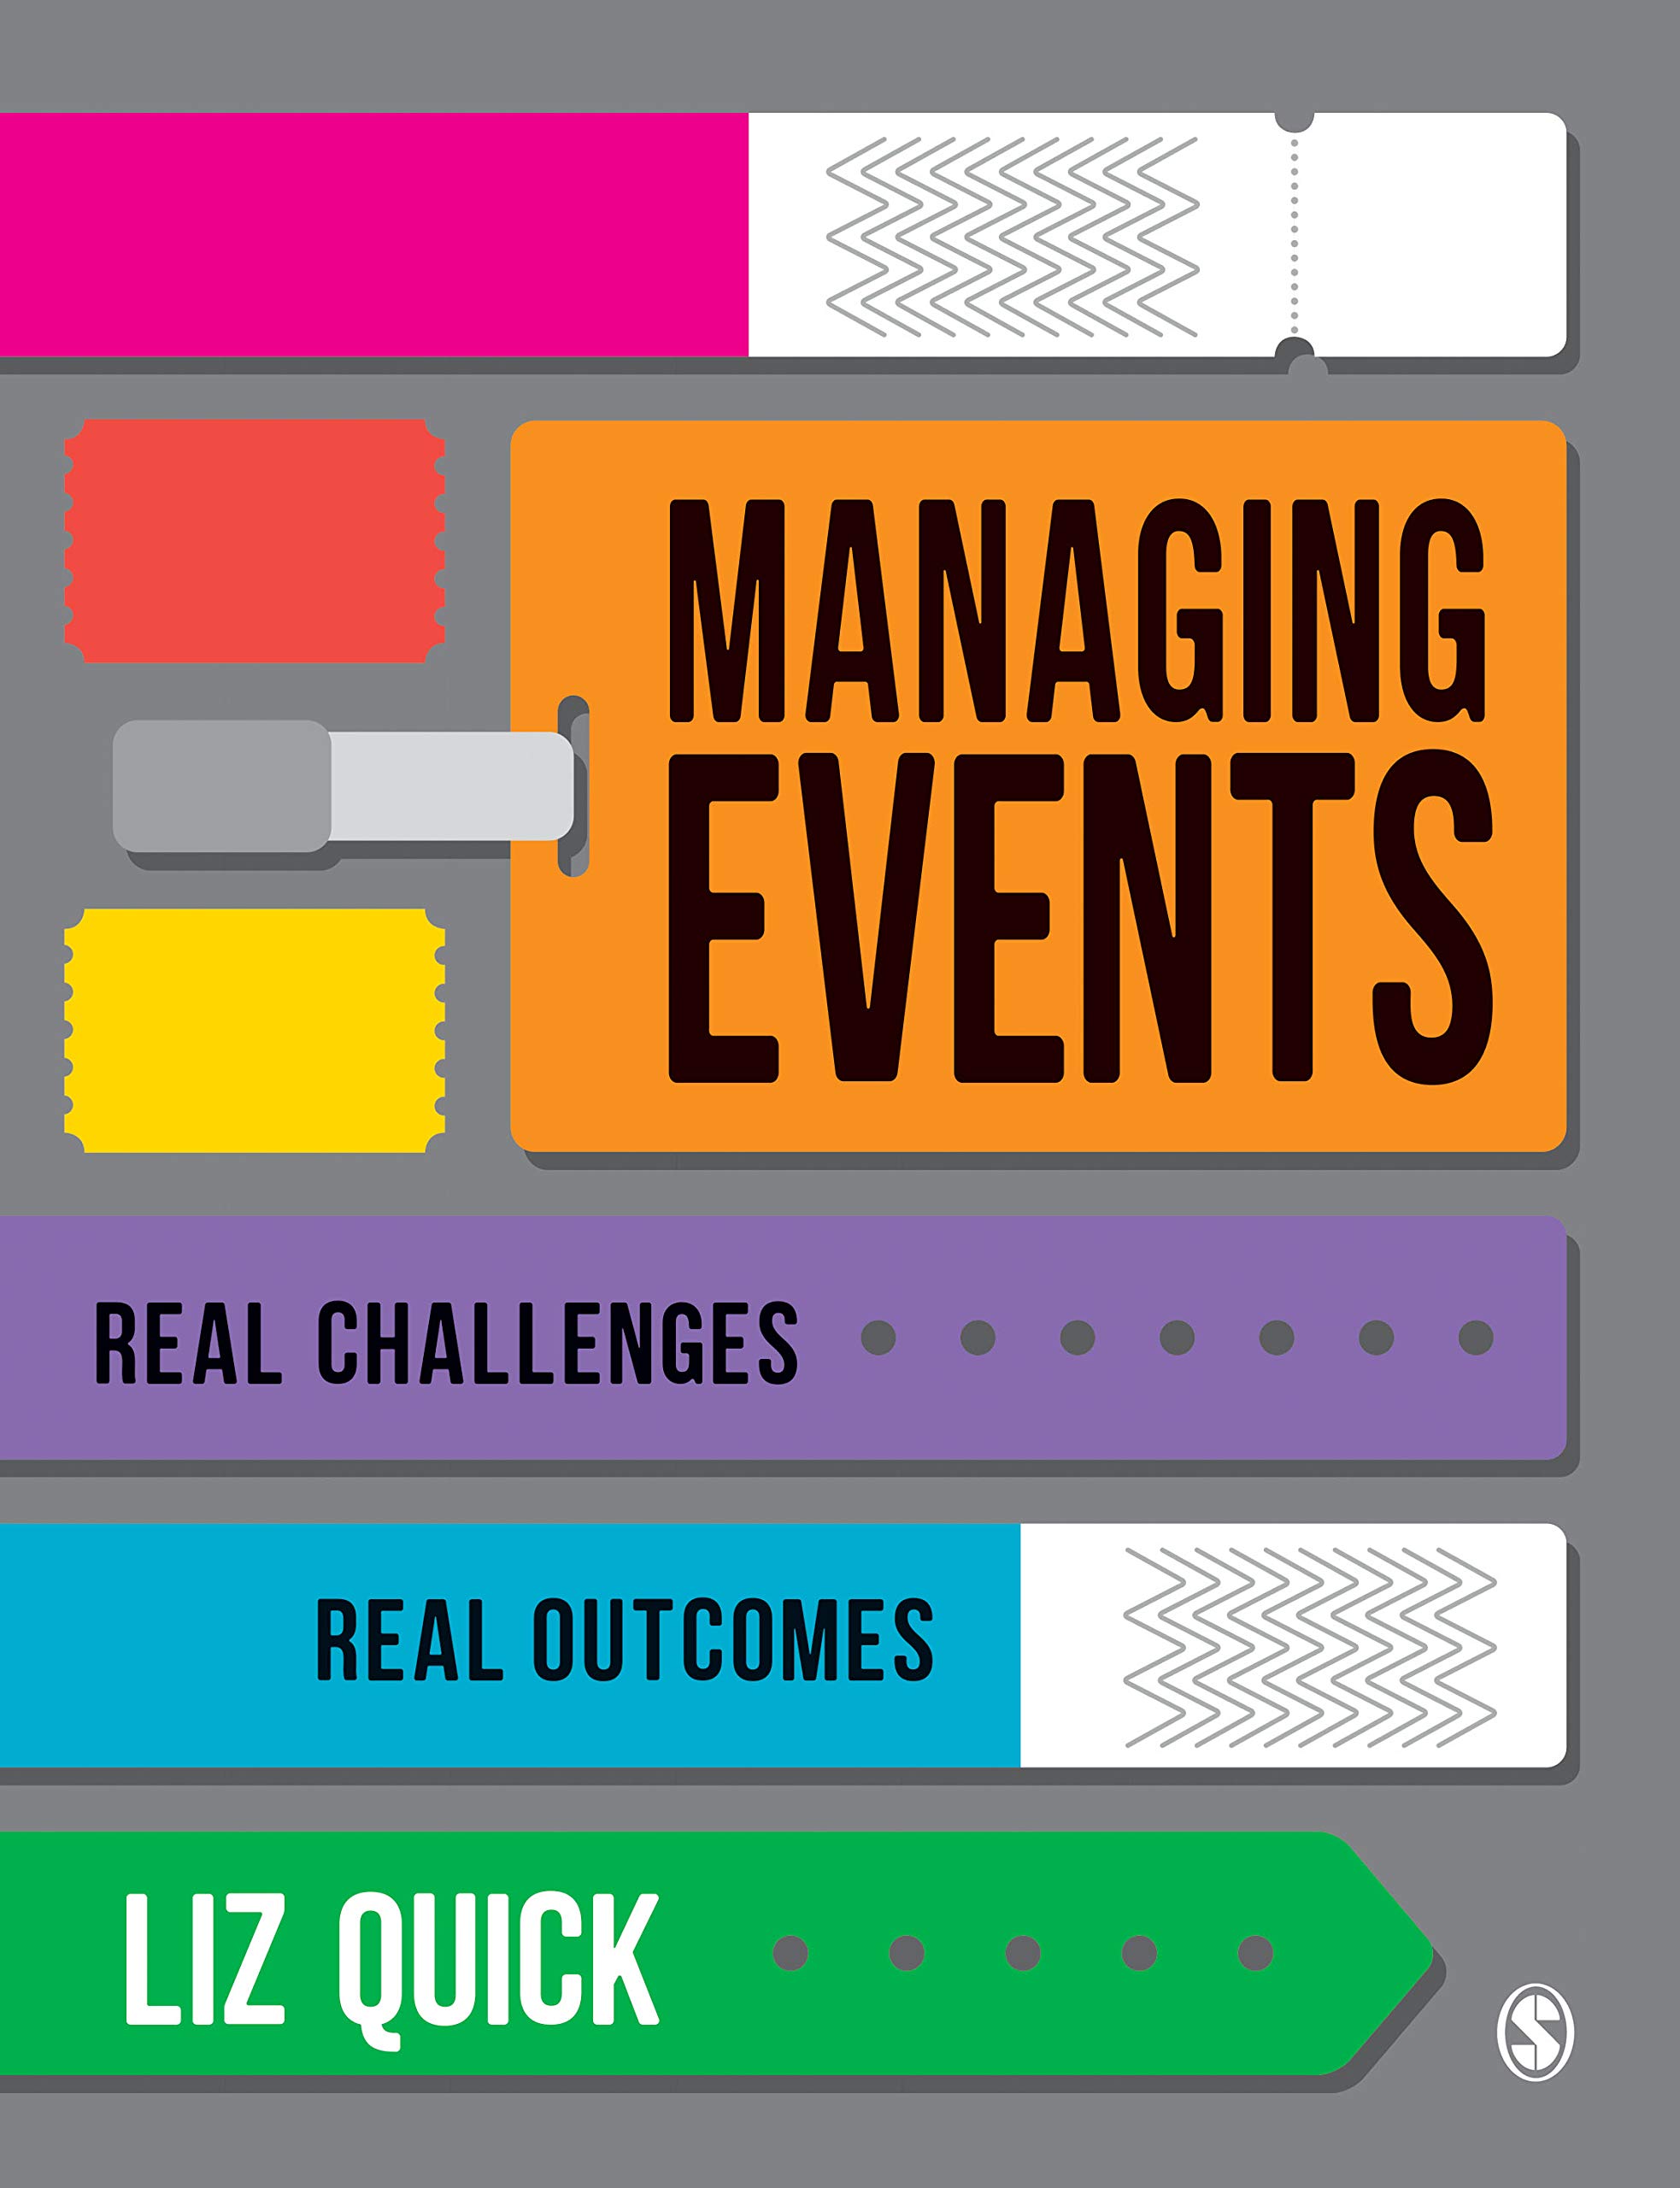 Managing Events